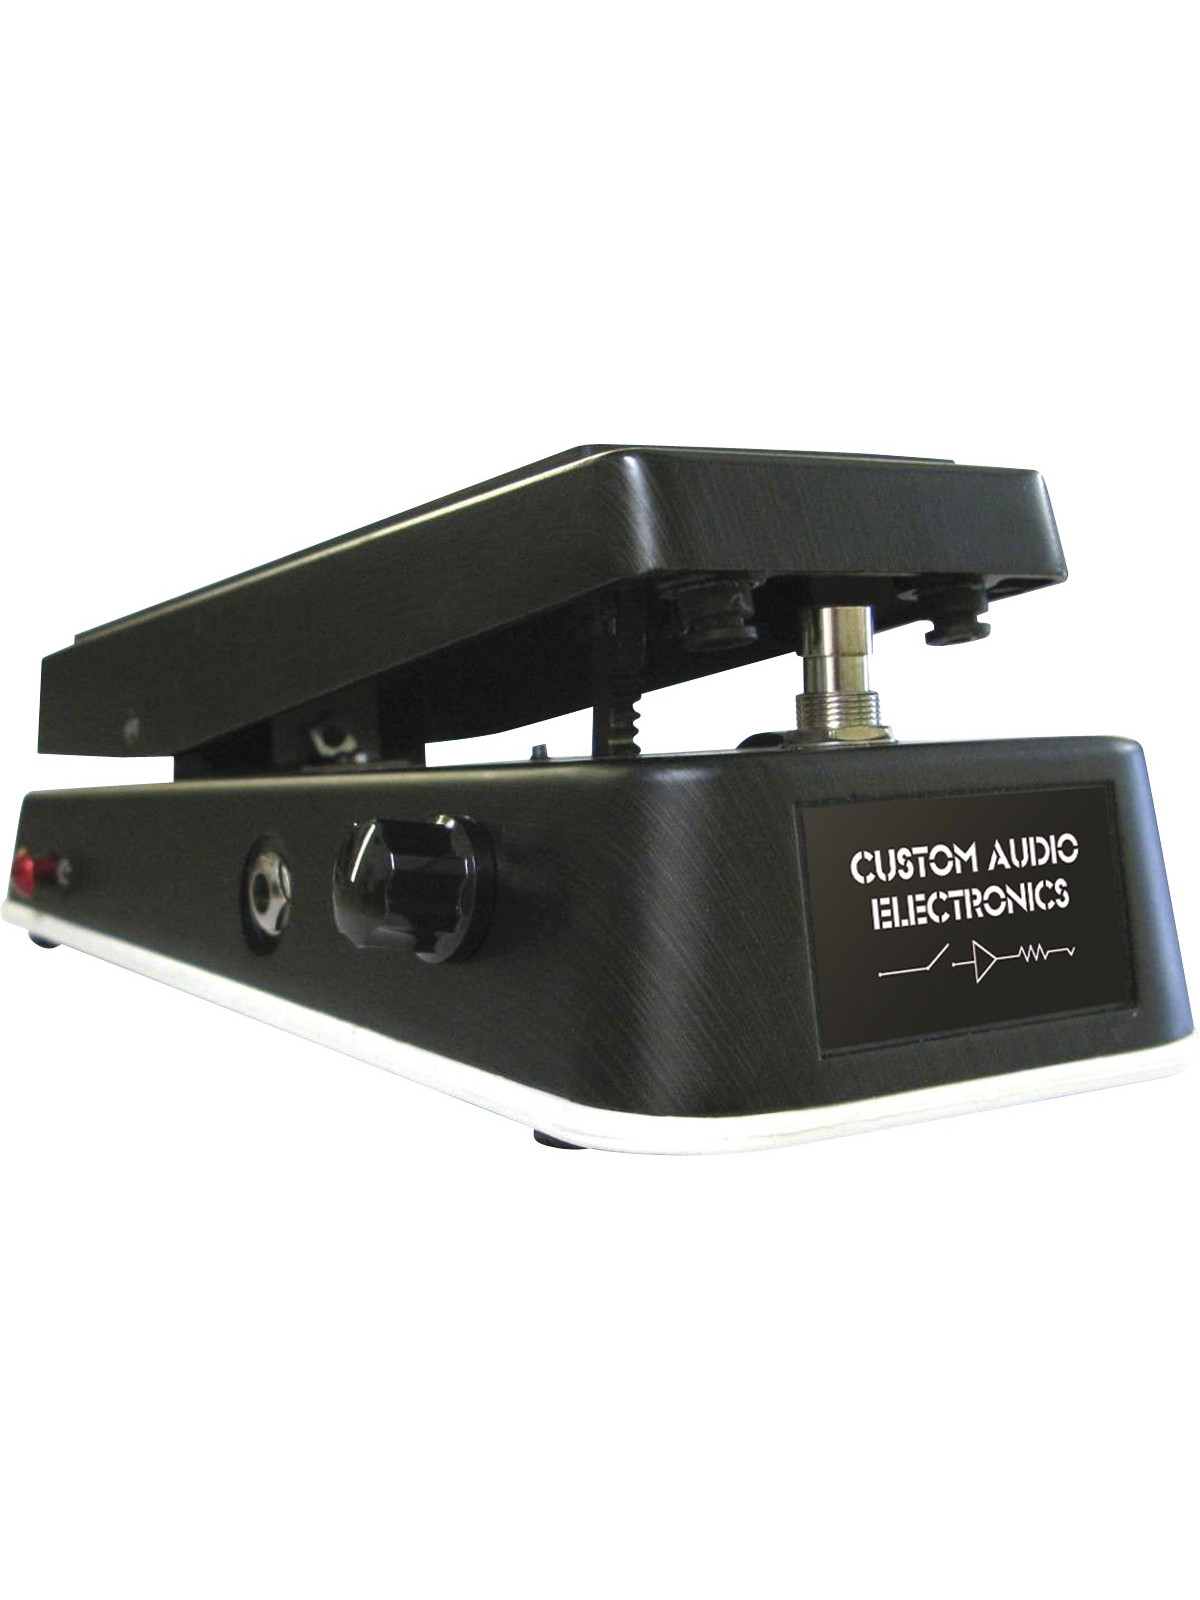 Dunlop MC404 Wah Custom Audio Electronics